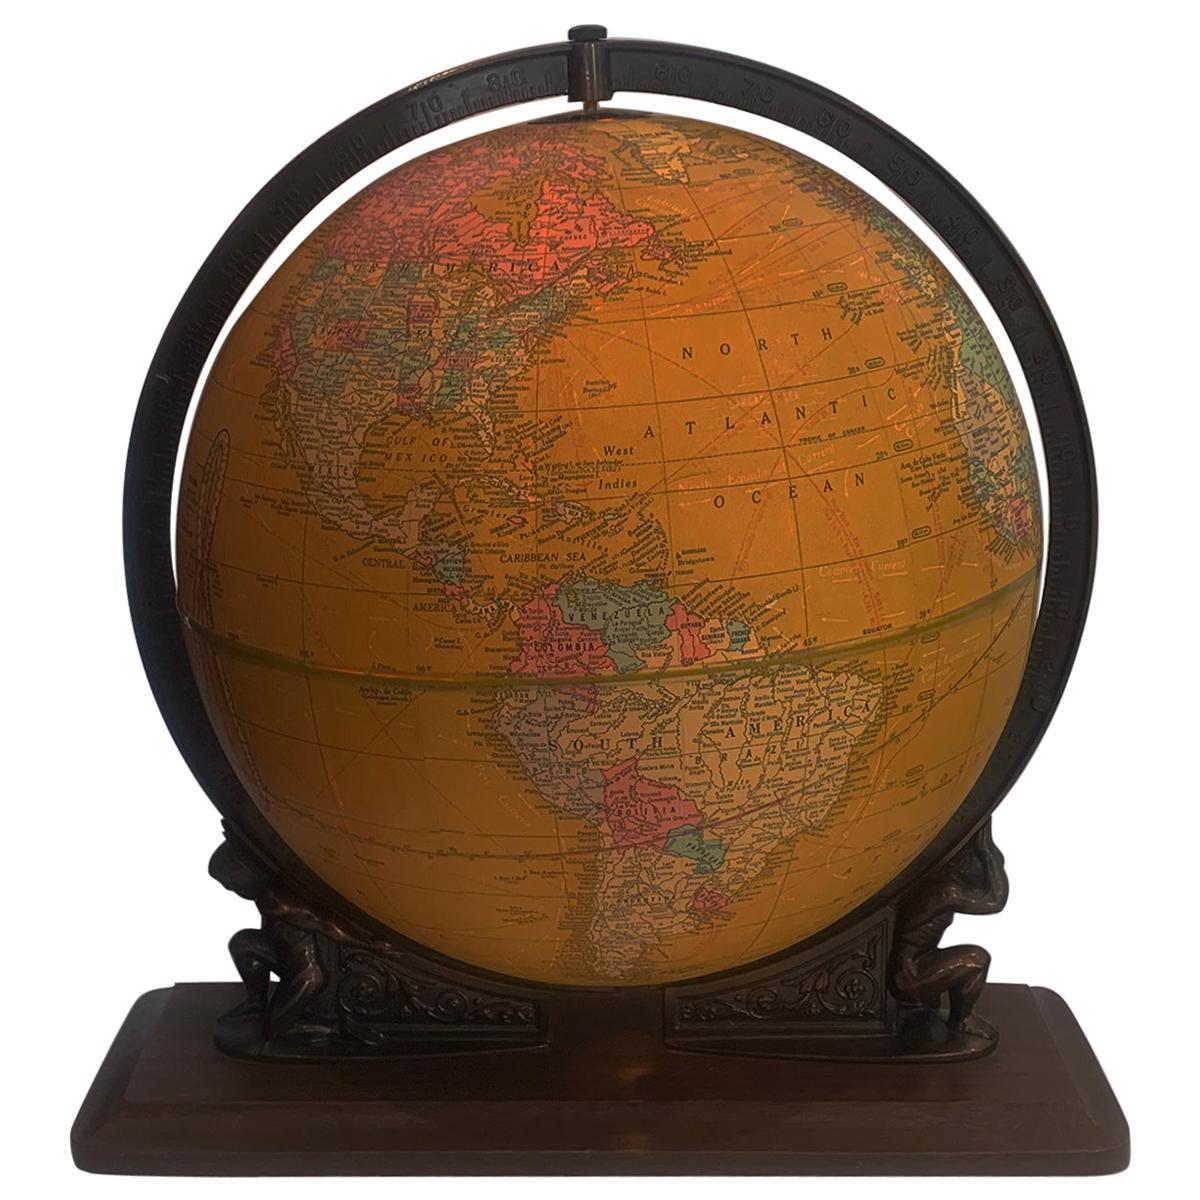 Crams Illuminated World Terrestrial Globe sitting on the shoulders of Atlas